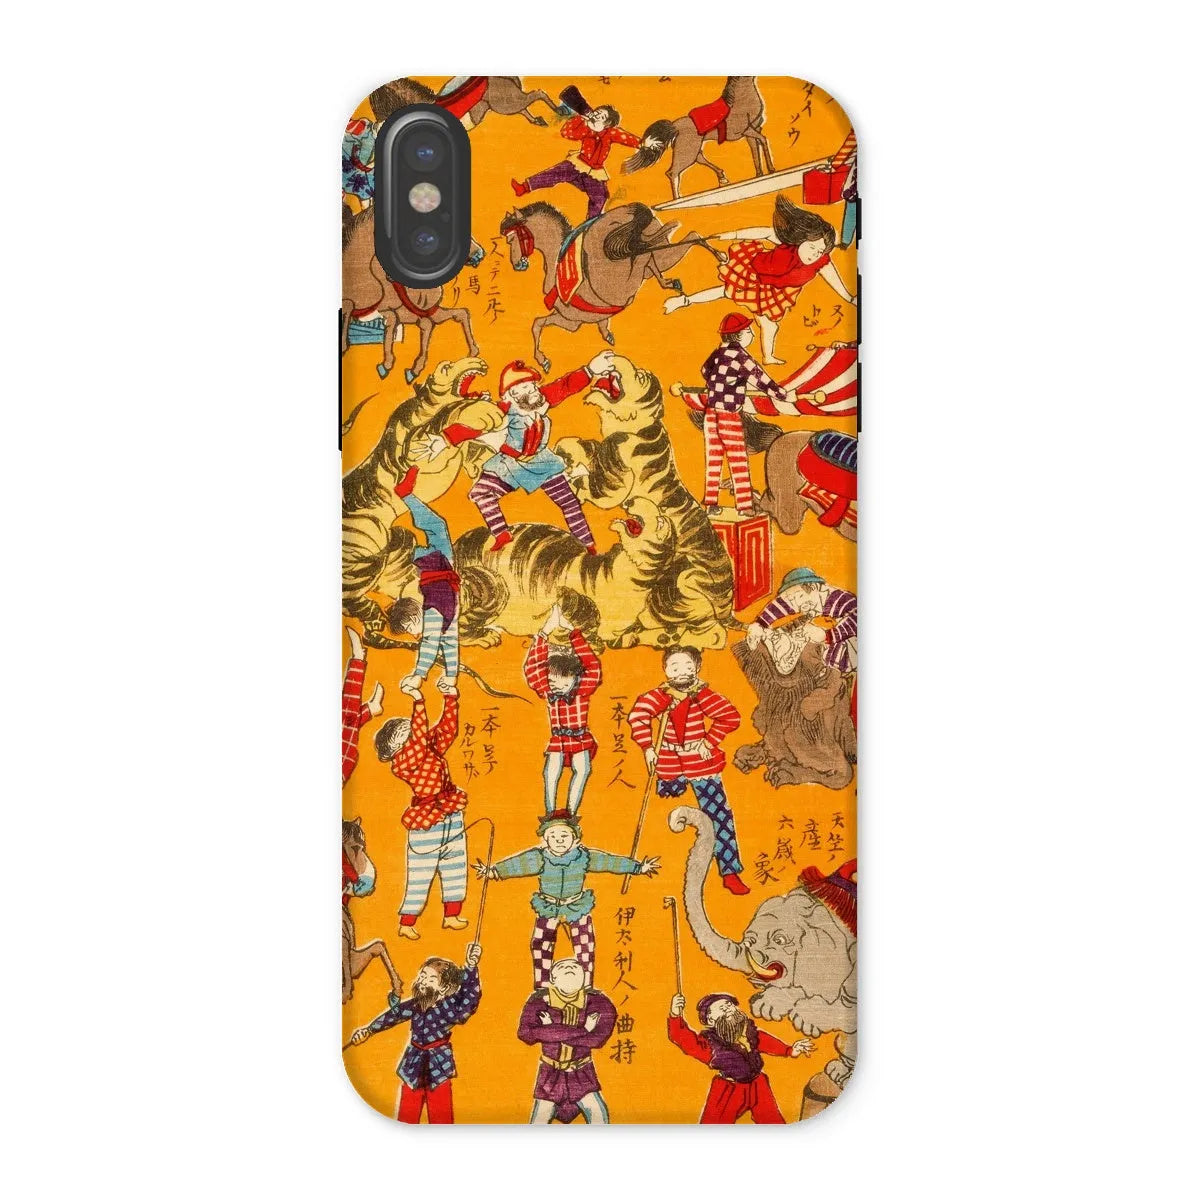 Japanese Circus Aesthetic Art Phone Case - Iphone x / Matte - Mobile Phone Cases - Aesthetic Art